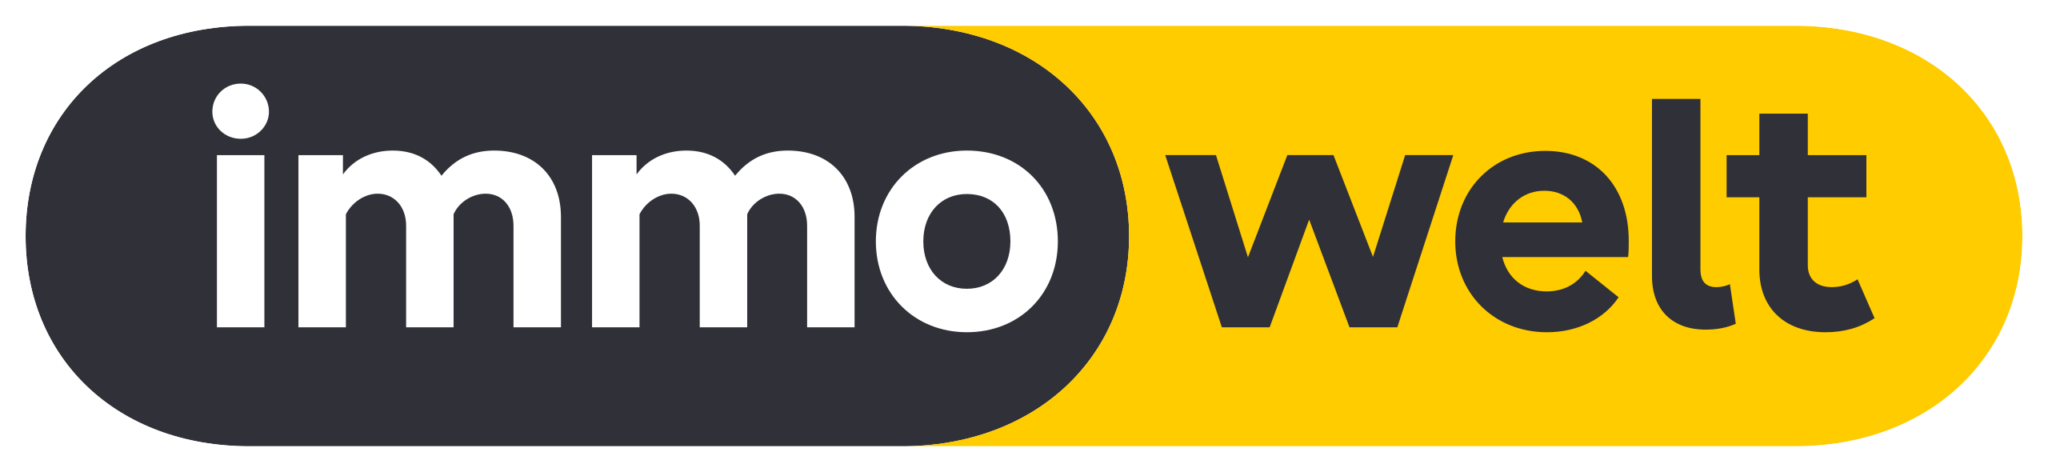 Immowelt_2021_logo.svg